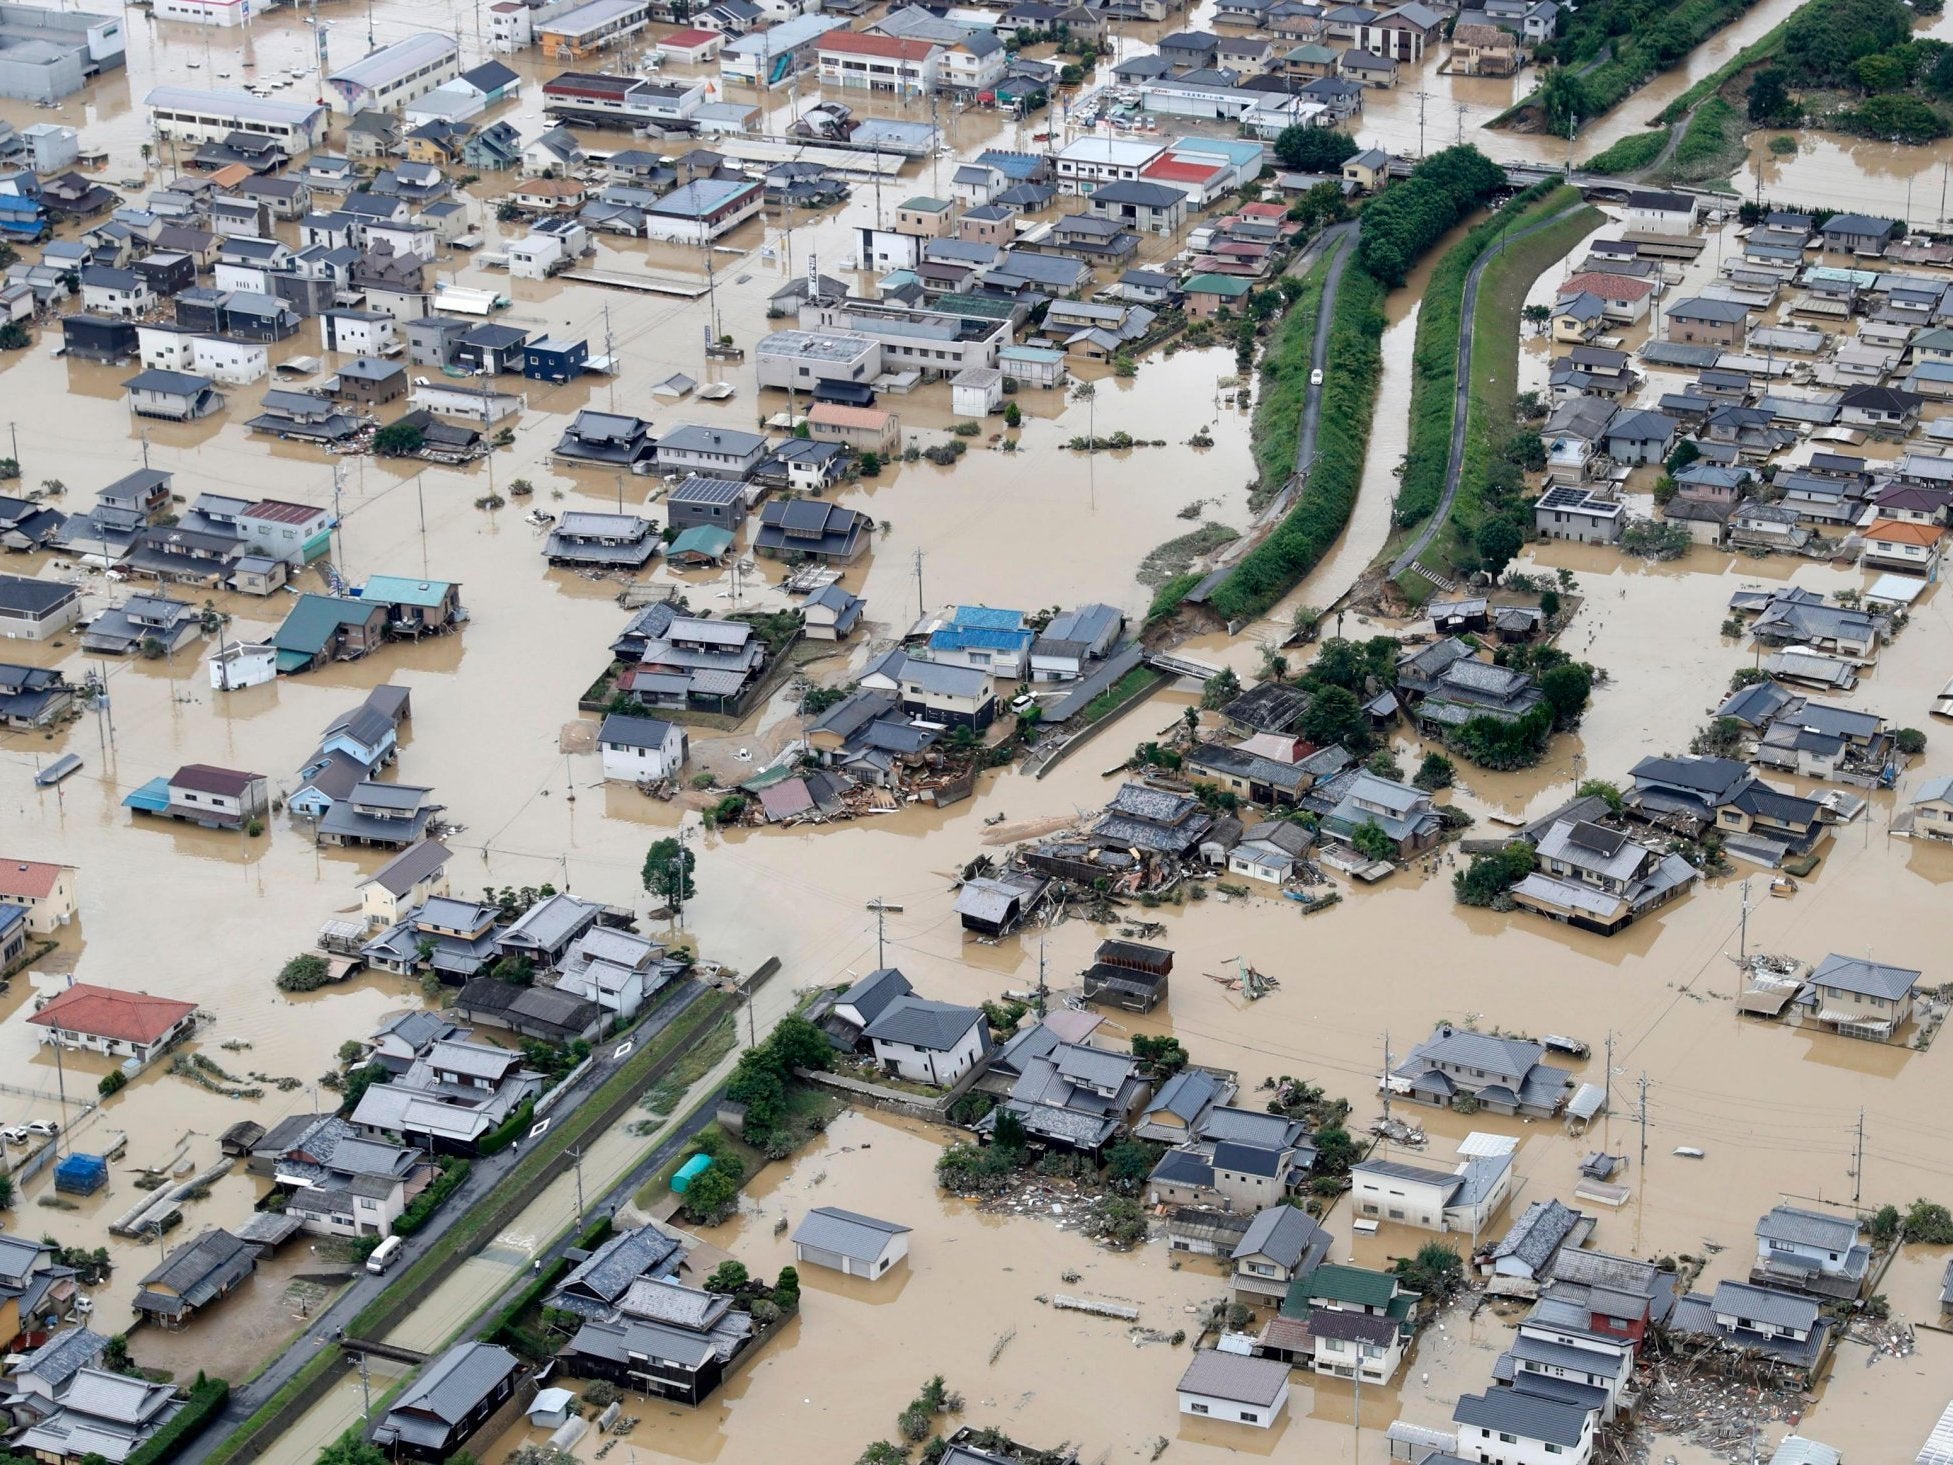 Houses submerged by muddy water following heavy rains in Kurashiki in Okayama prefecture